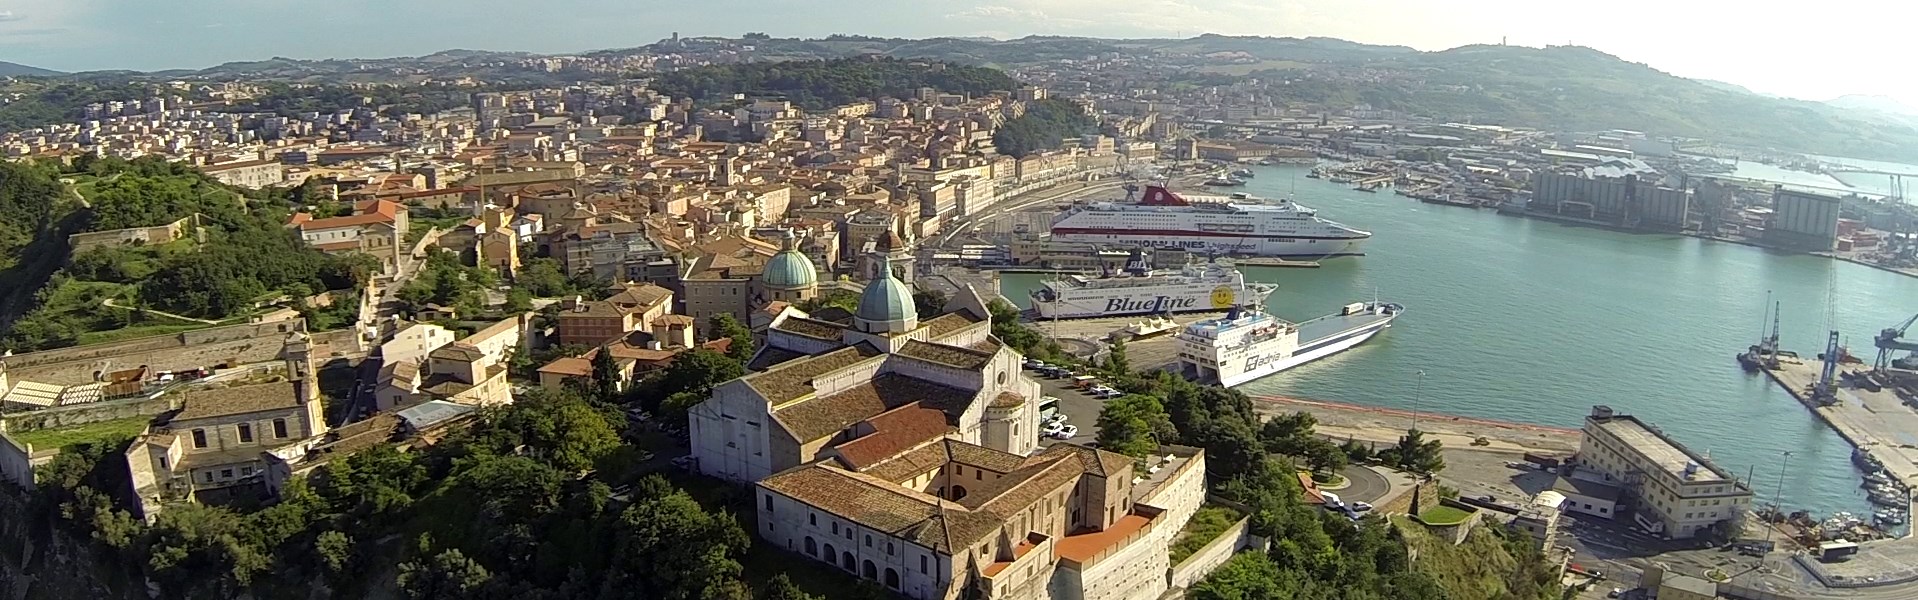 Ancona - vista aerea